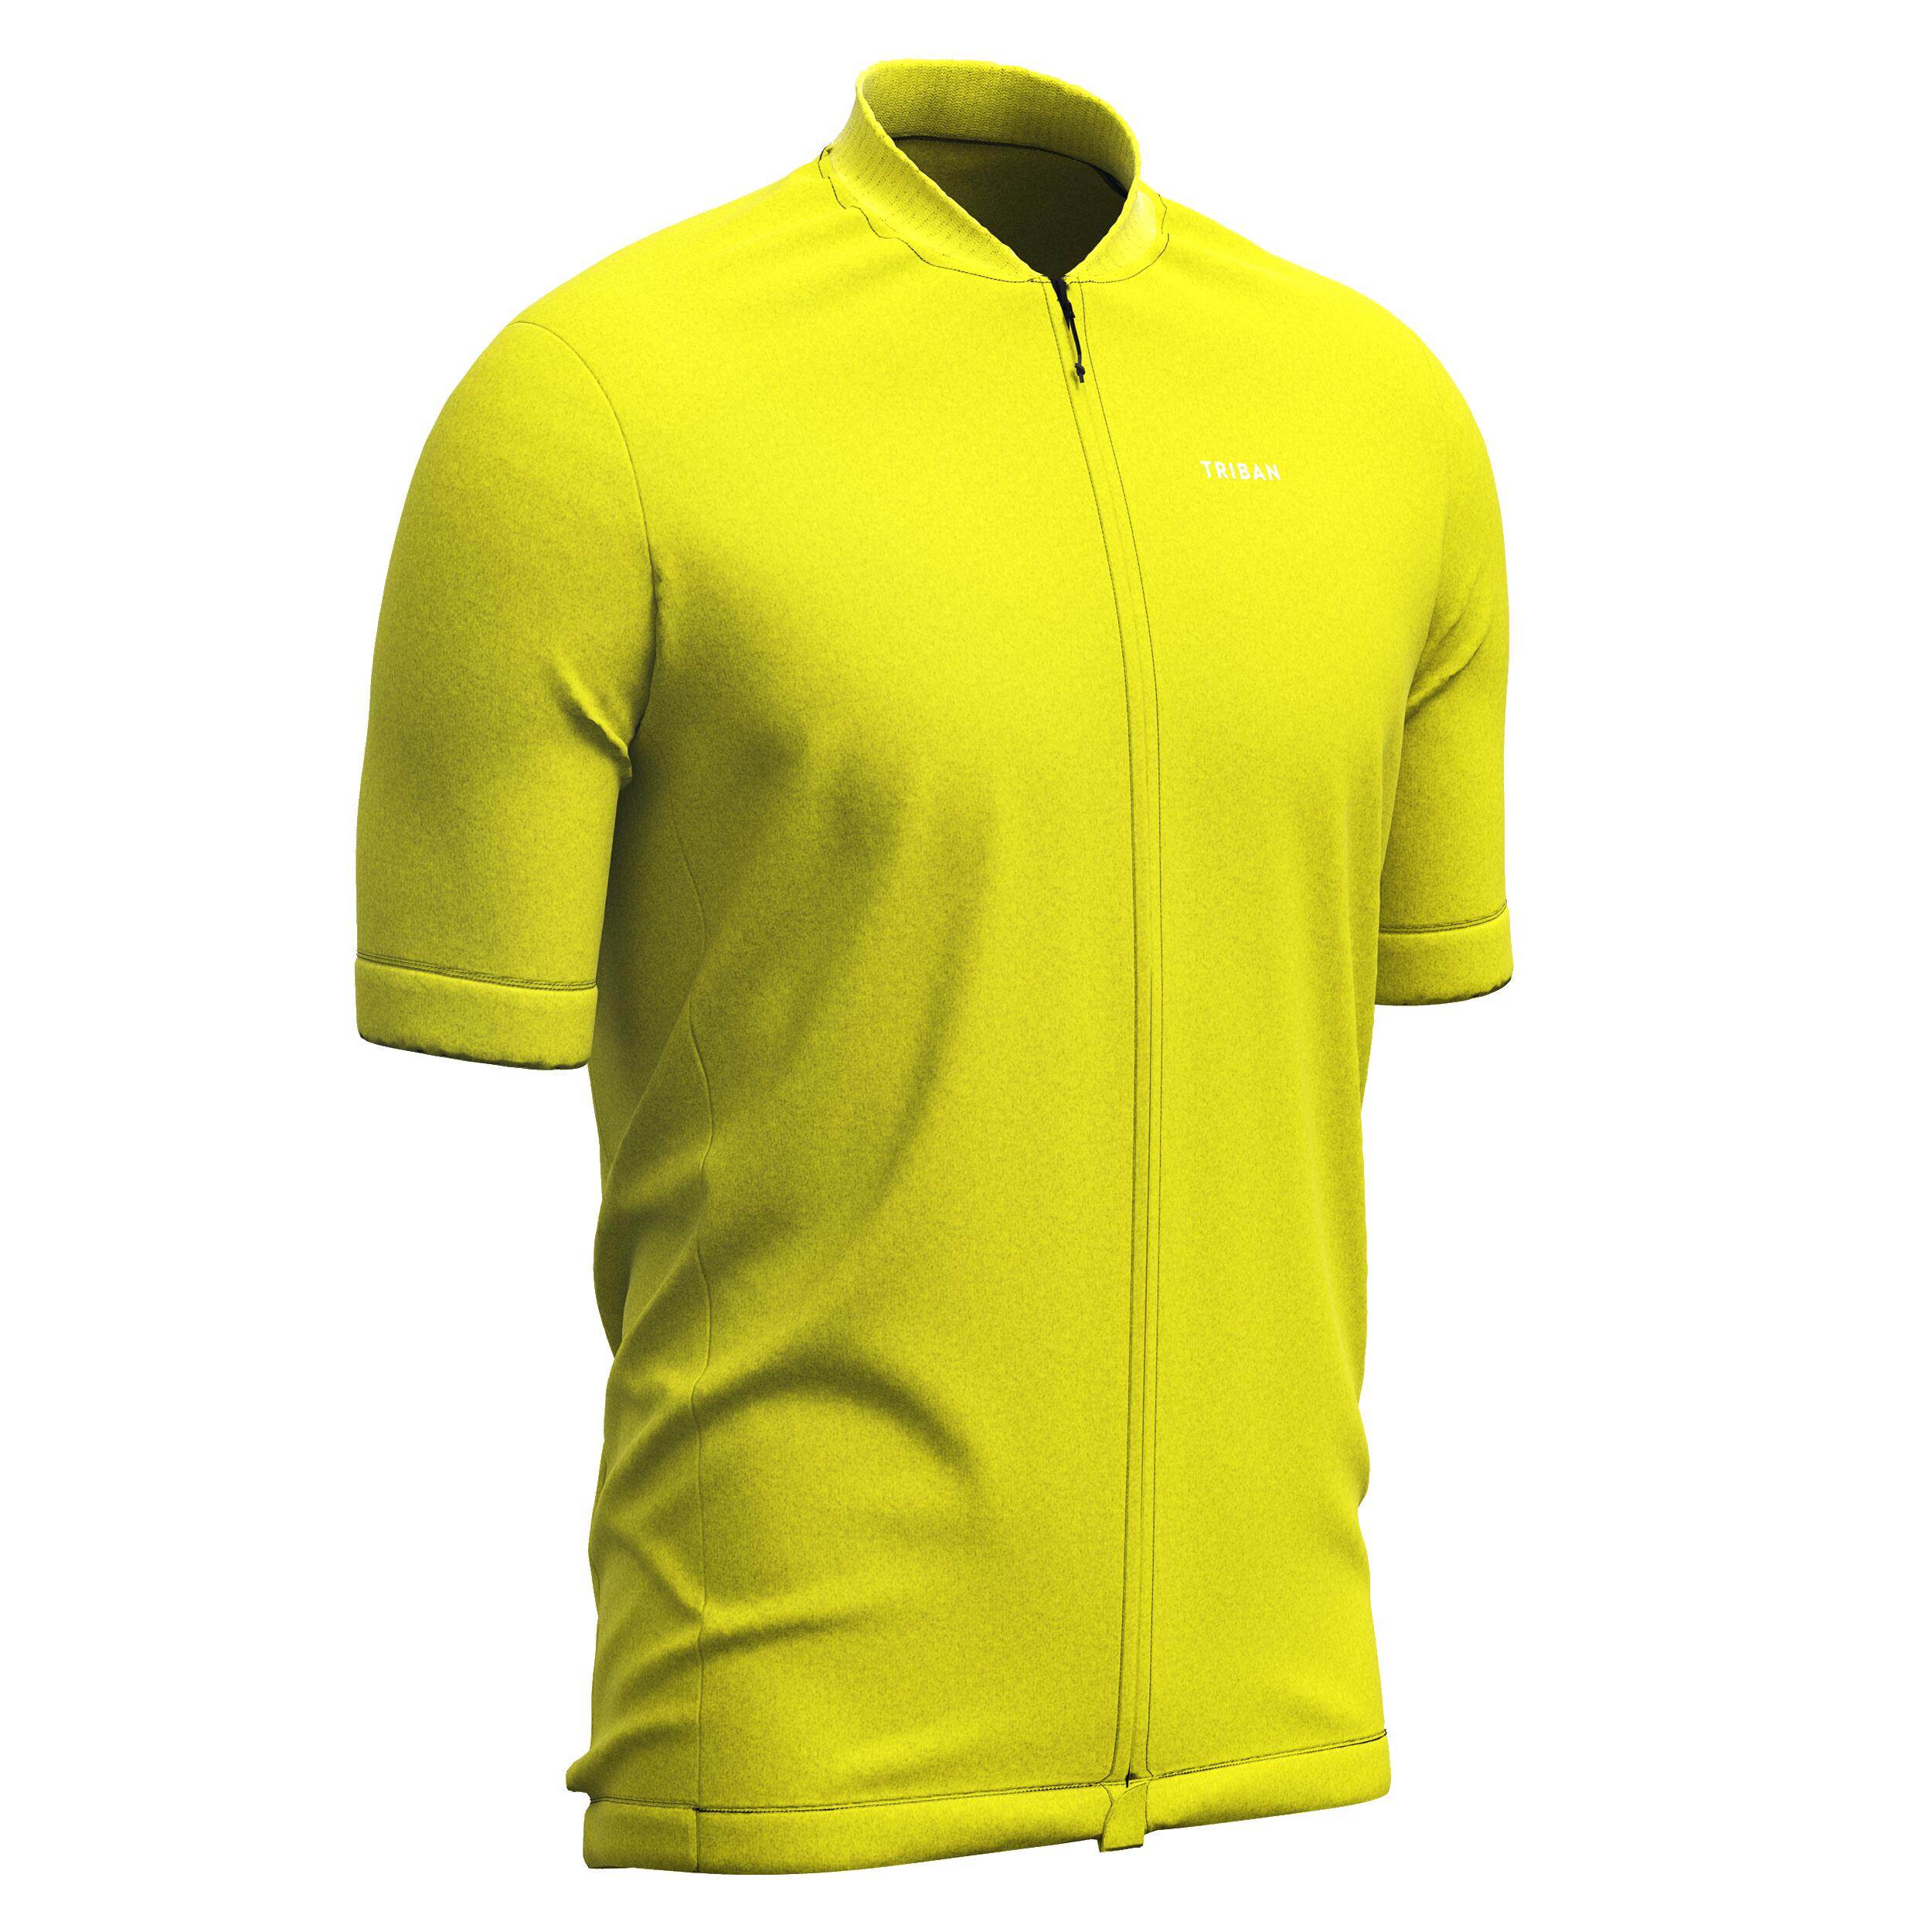 VAN RYSEL Men's Short-Sleeved Road Cycling Summer Jersey RC100 - Yellow